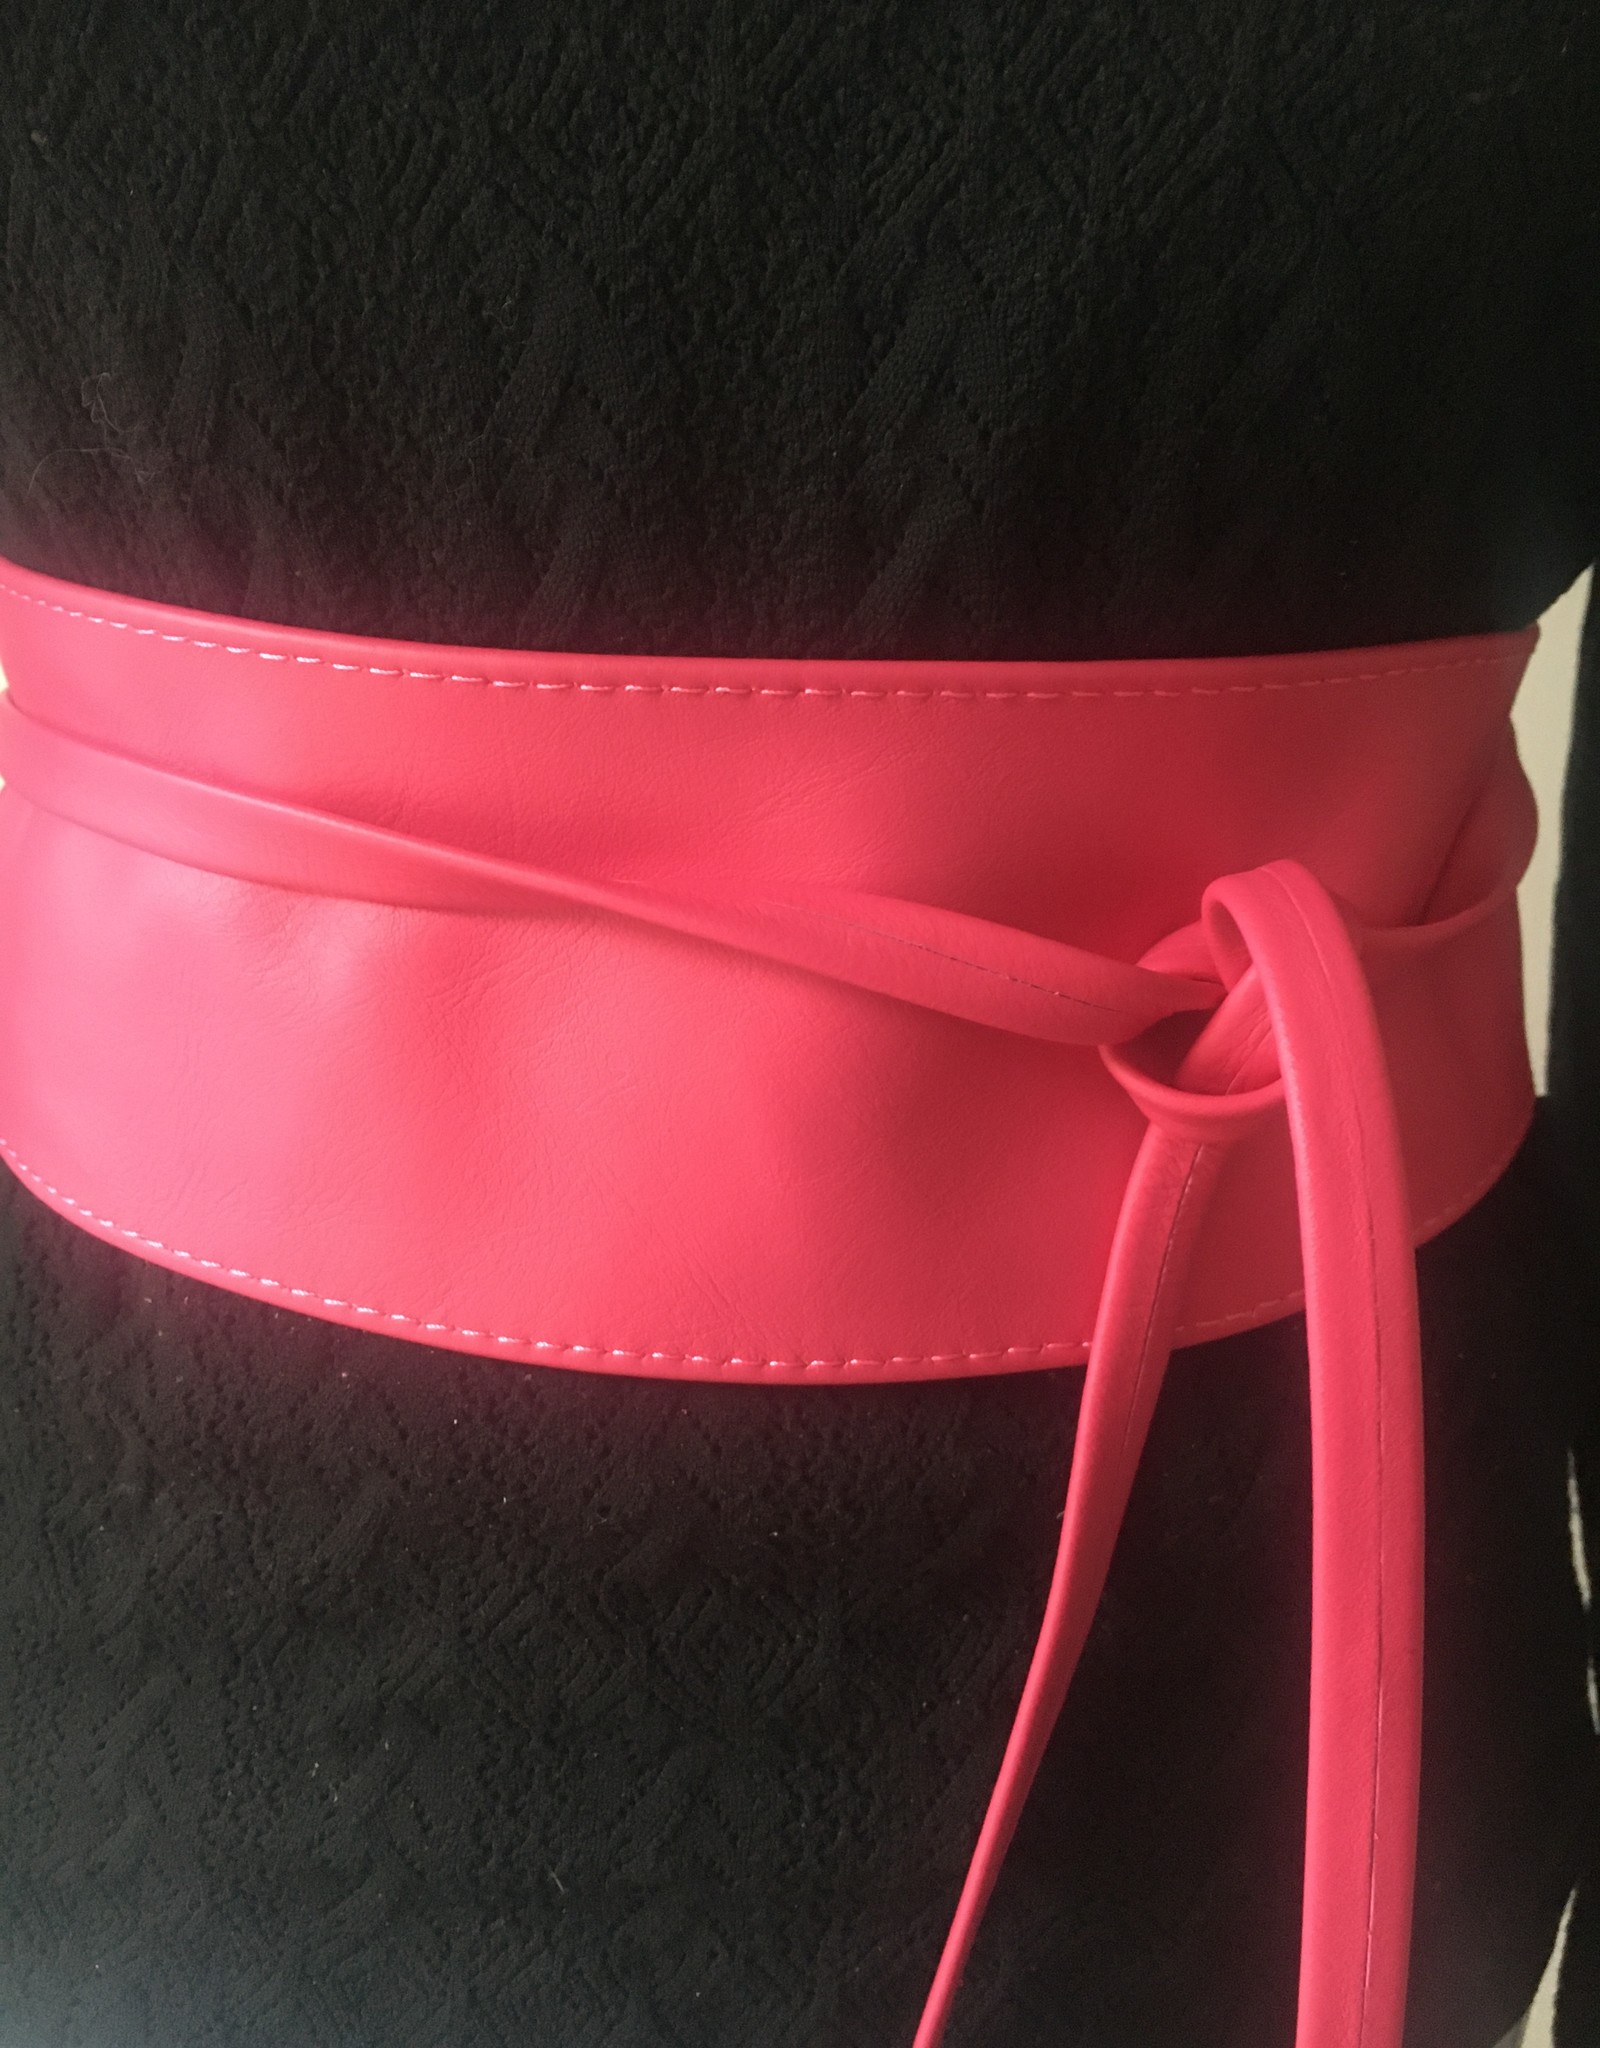 Wide leather belt, several colors